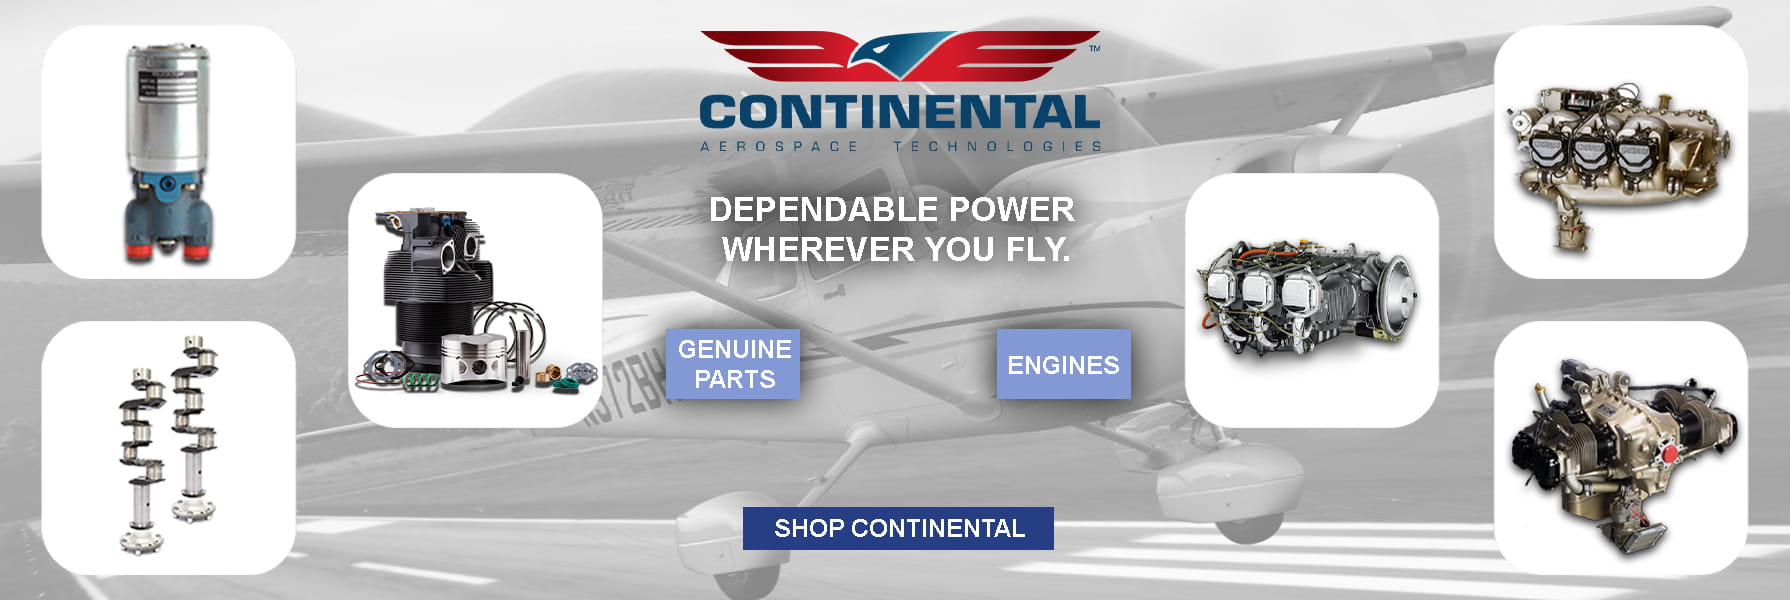 Banner Continental Aerospace Technologies